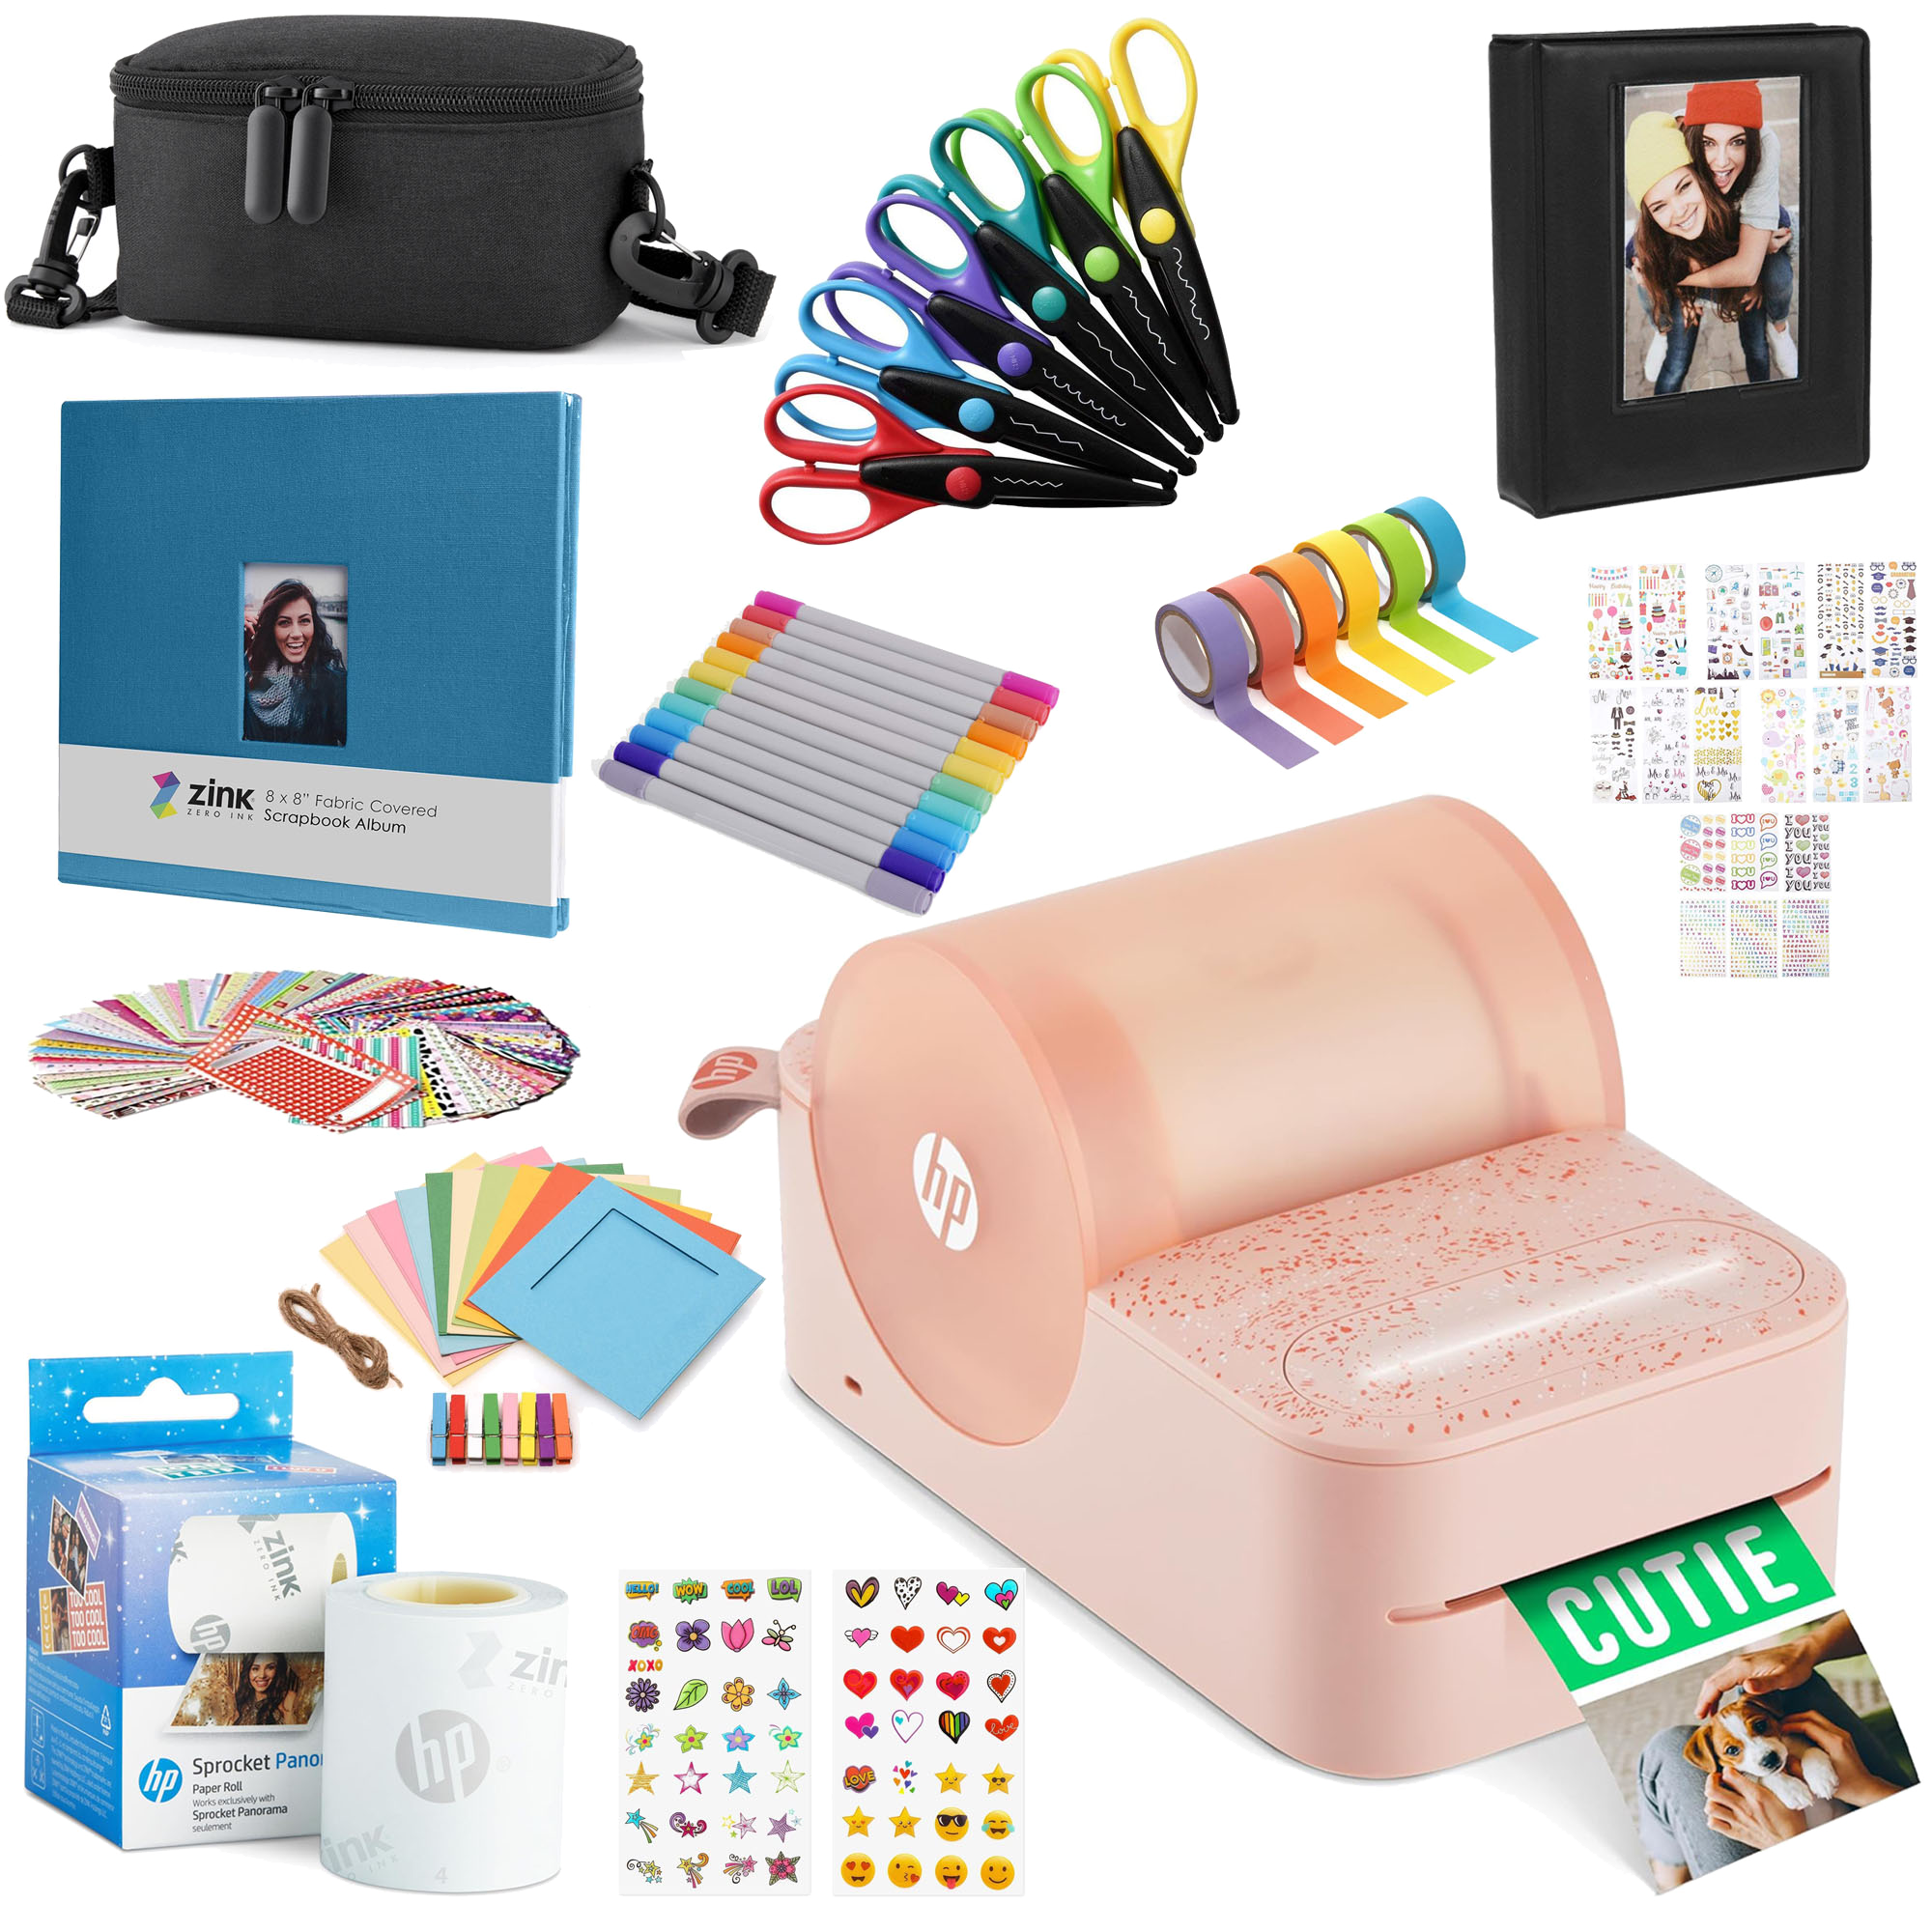 HP Sprocket Panorama Instant Portable Color Label & Photo Printer (Pink) Craft Bundle